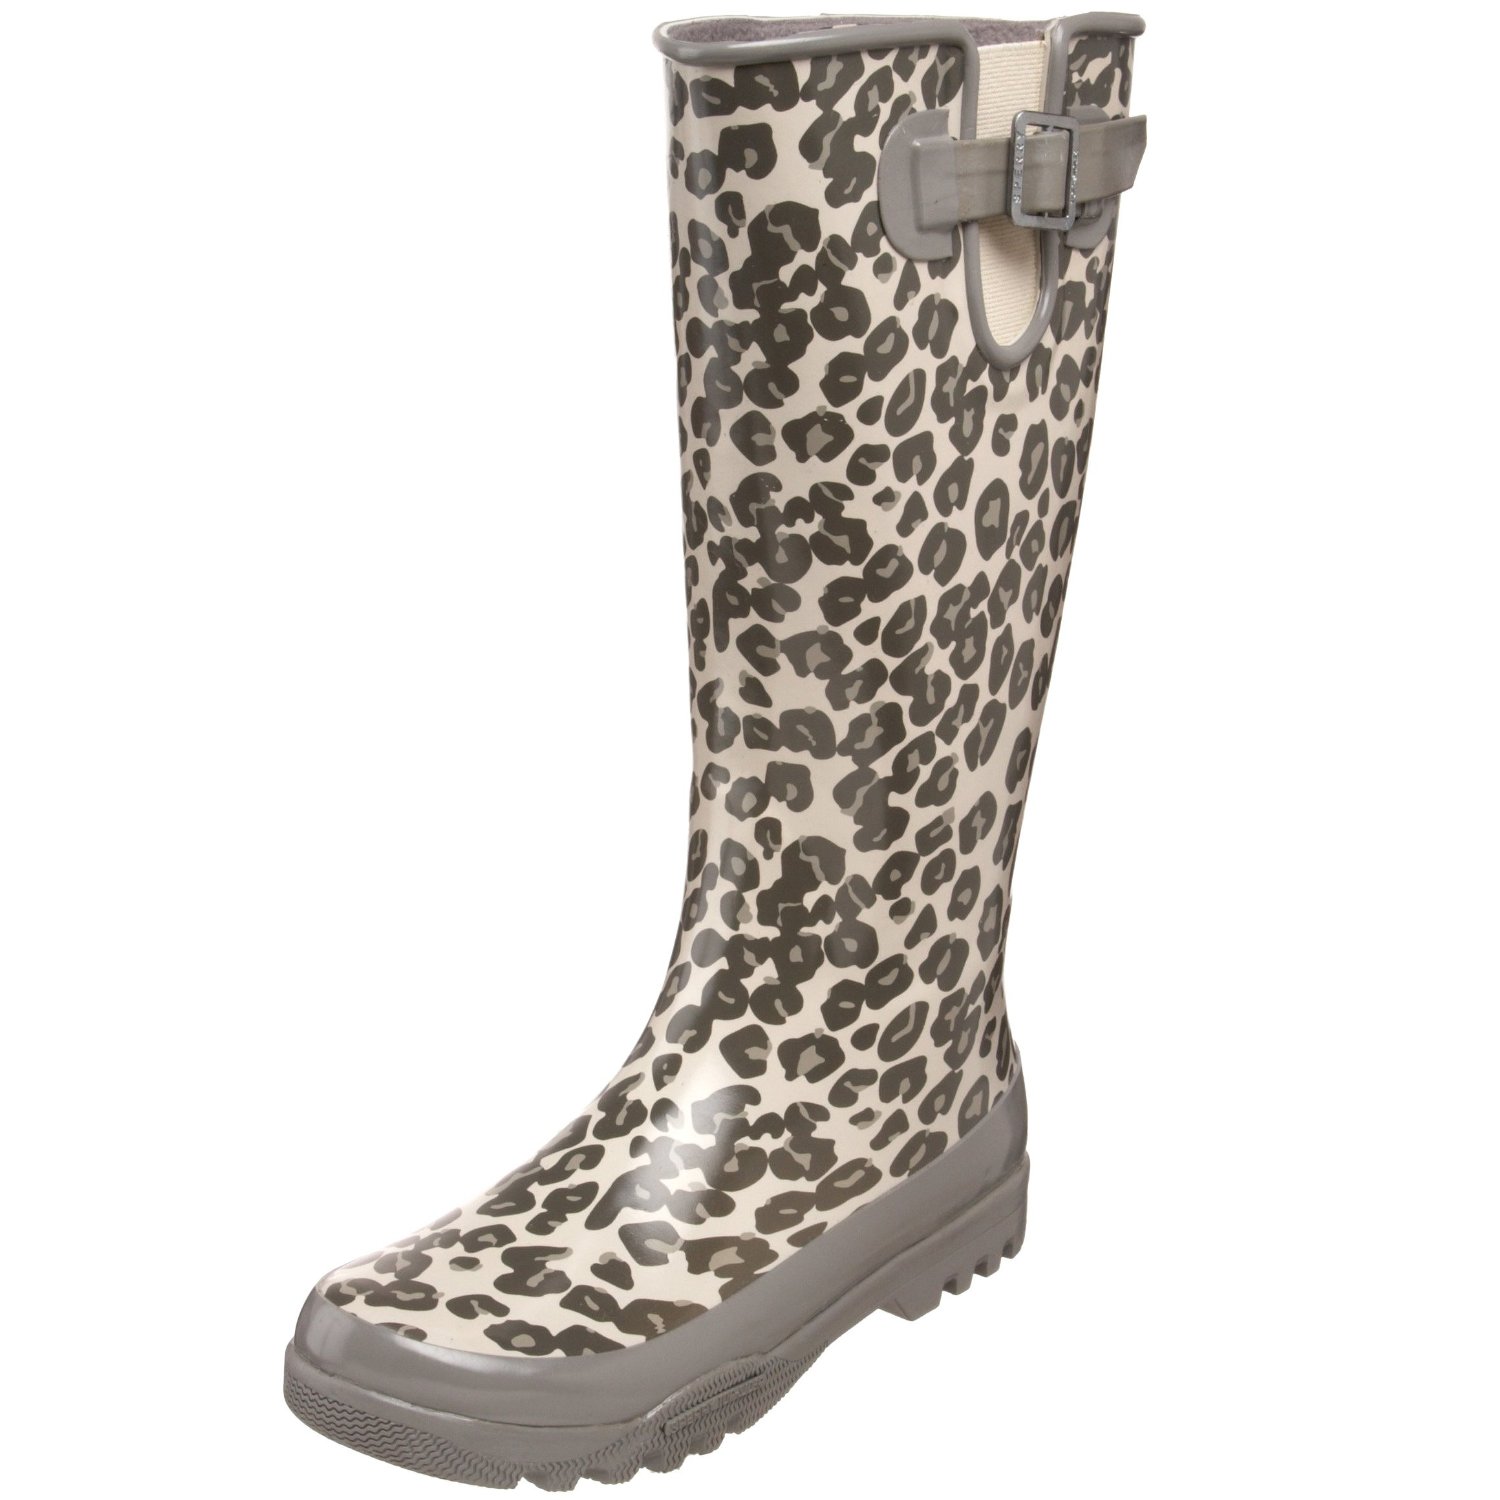 Sperry Top-sider Womens Pelican Rain Boot in Animal (gray leopard) | Lyst